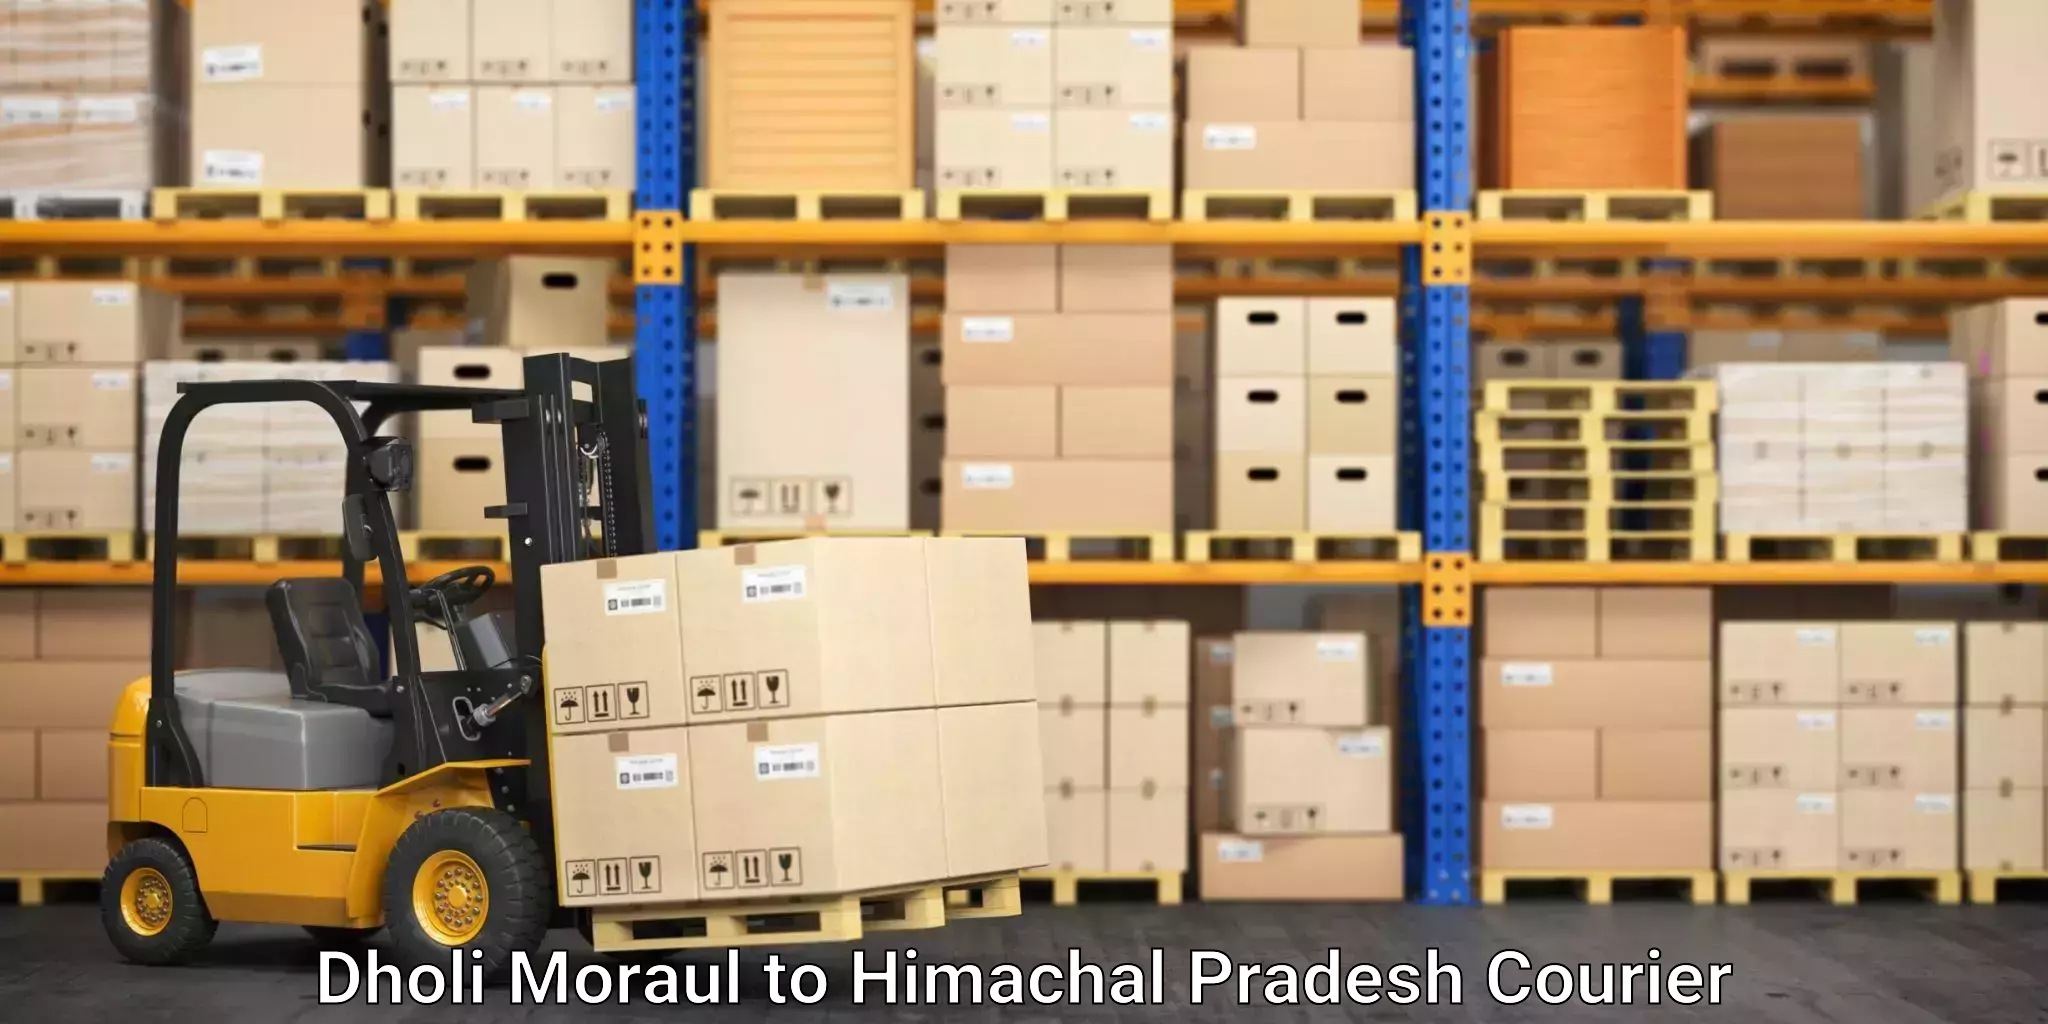 Furniture moving experts Dholi Moraul to Jahu